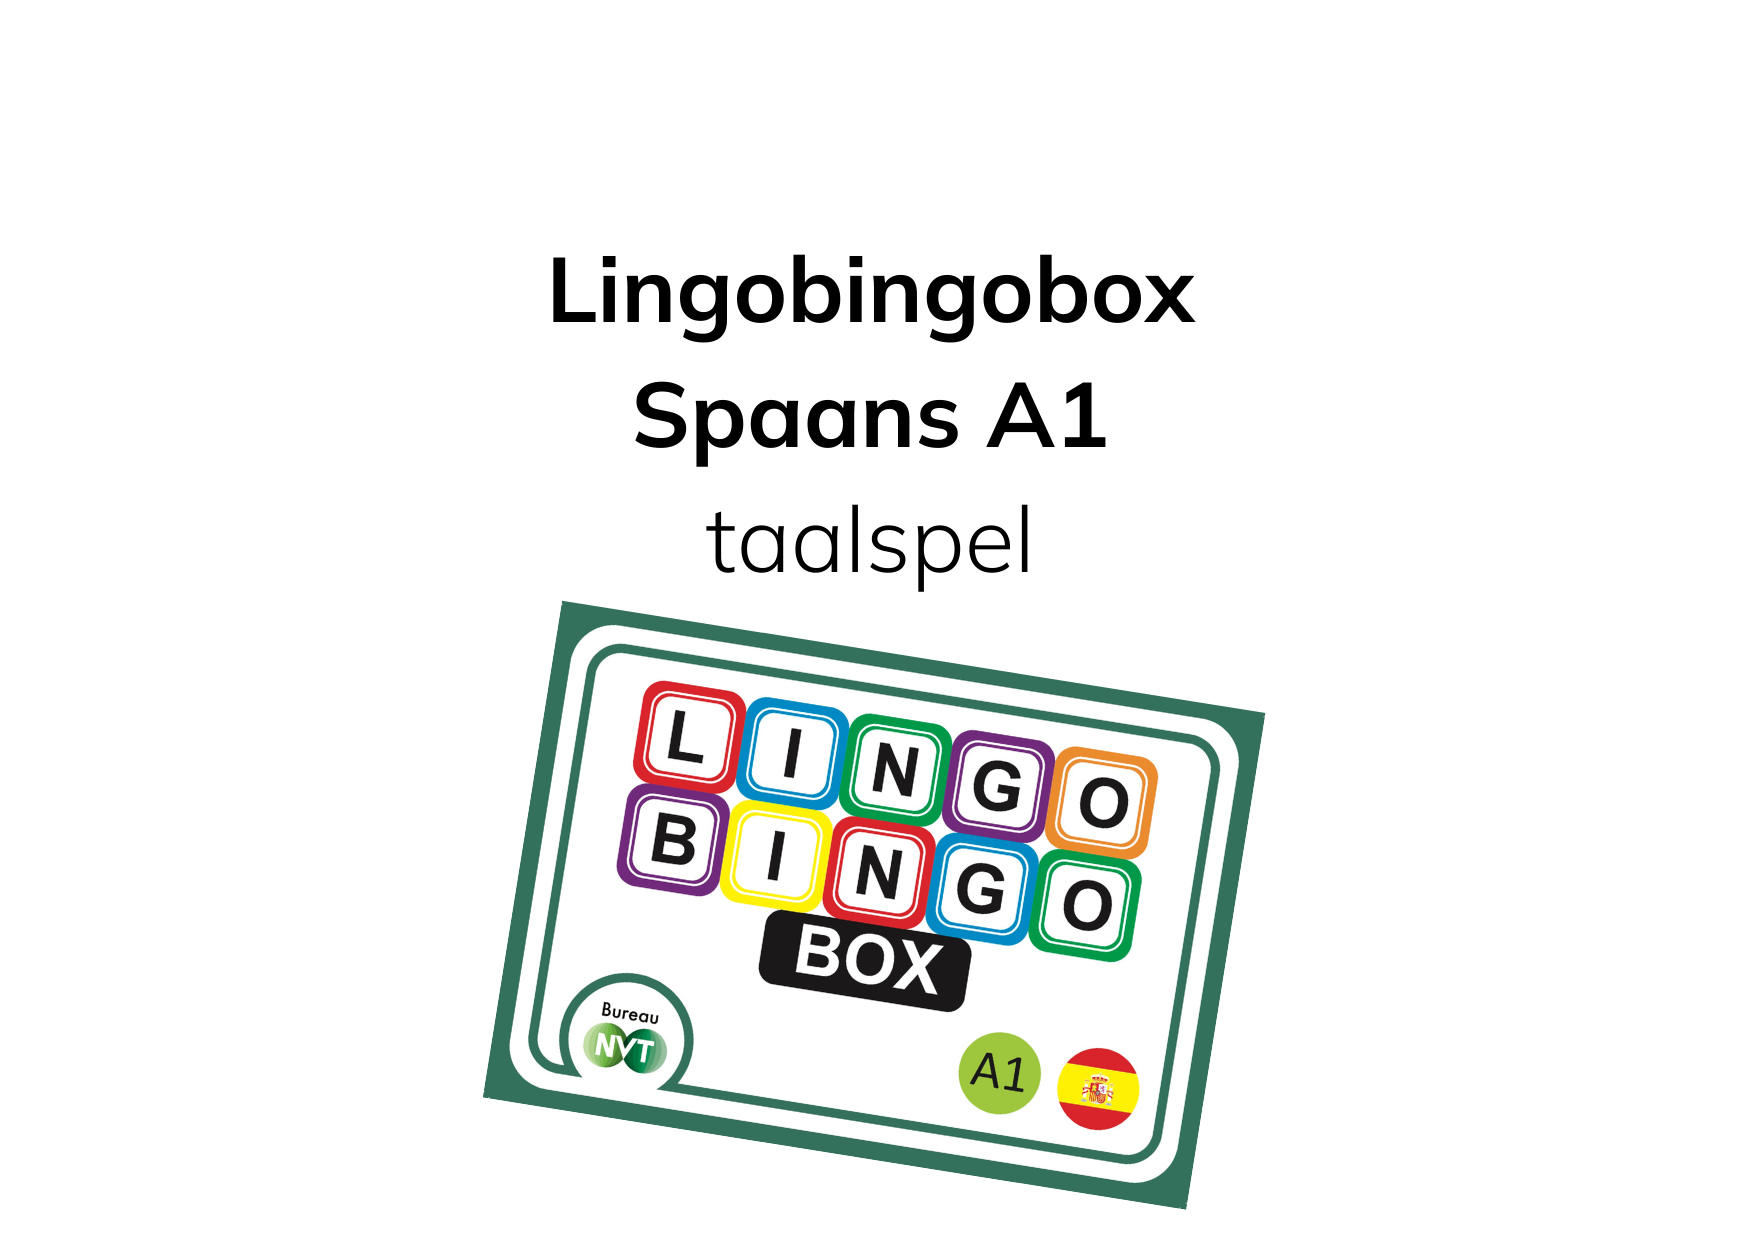 Lingobingobox español A1